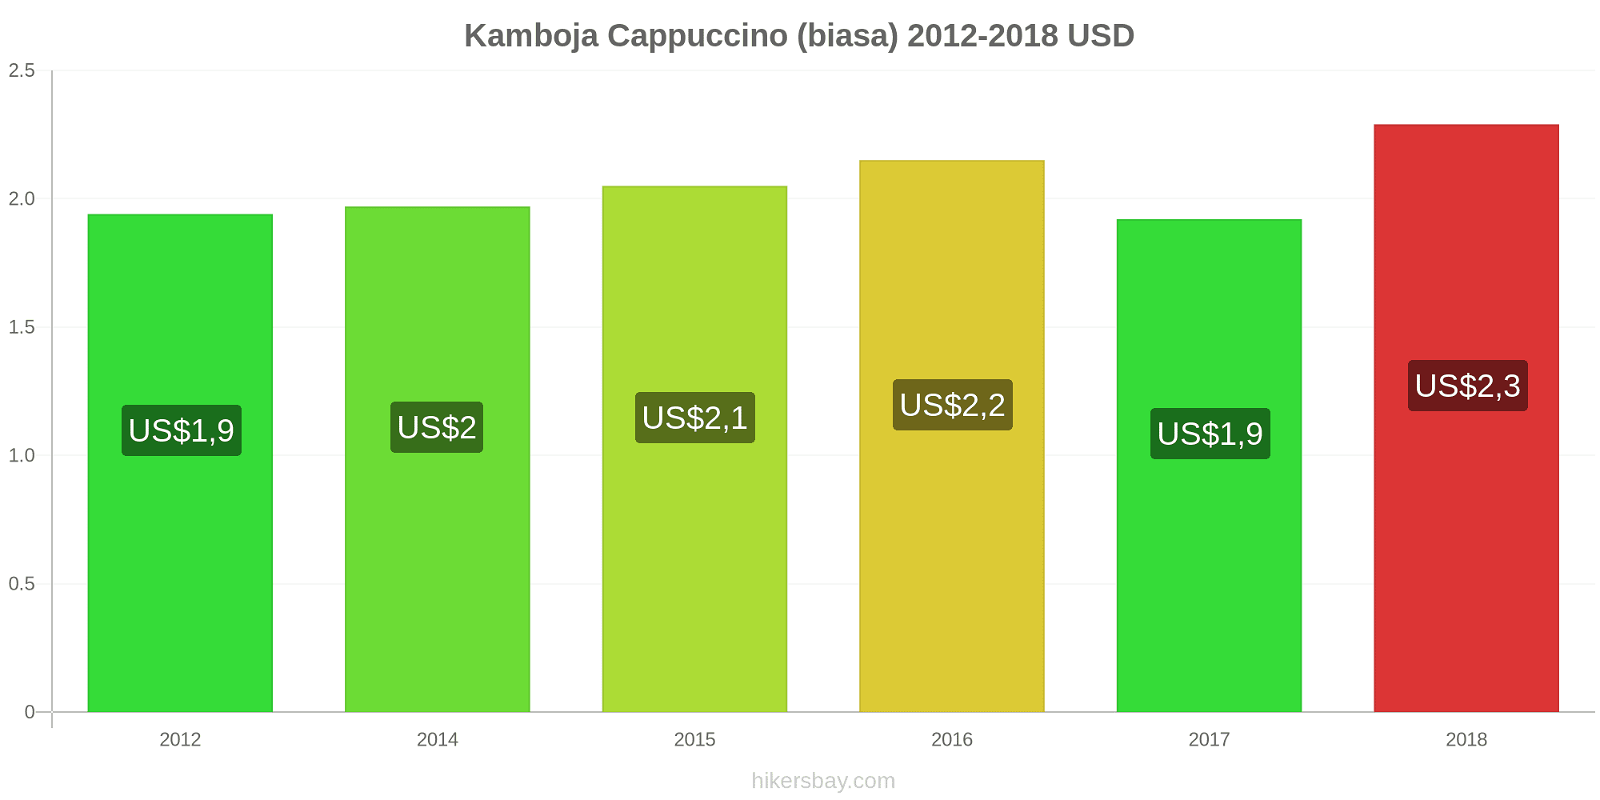 Kamboja perubahan harga Cappuccino hikersbay.com